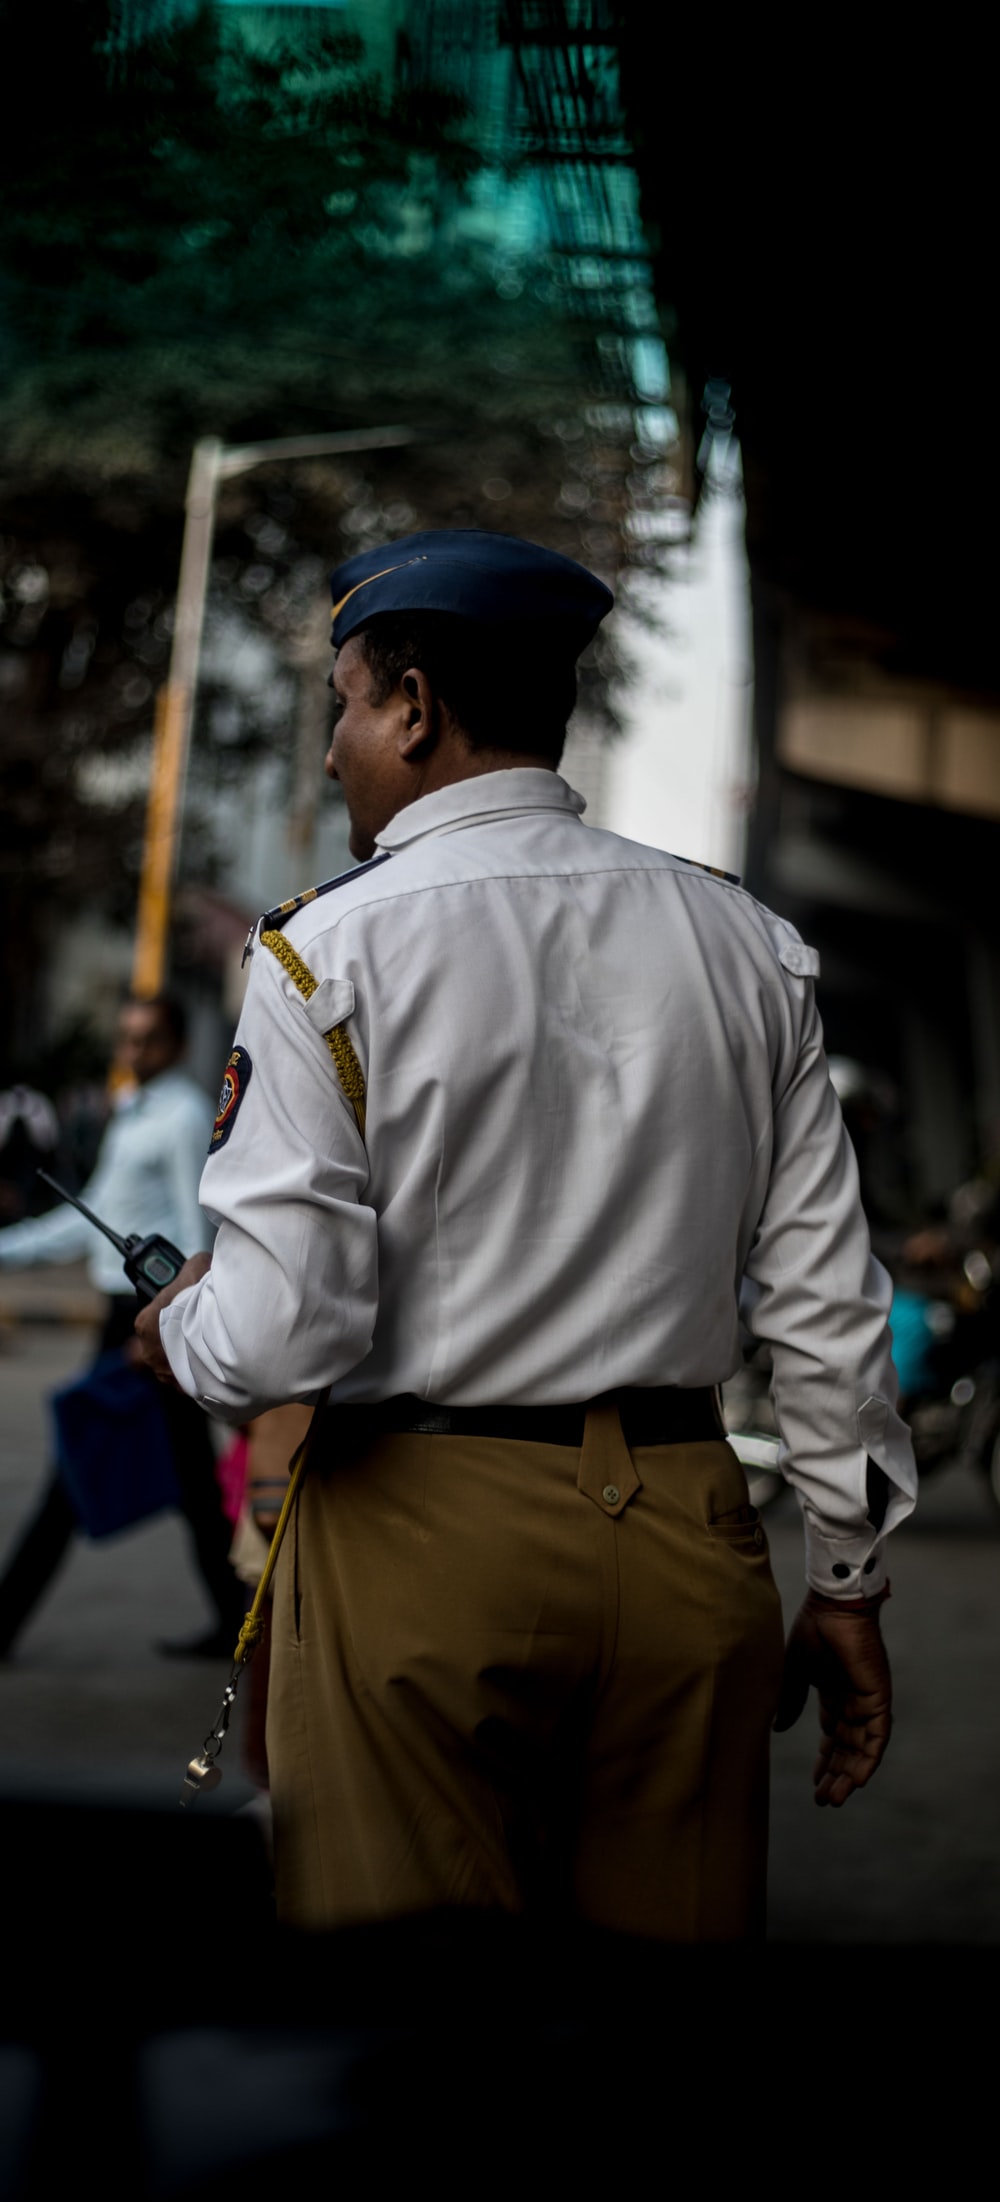 Mumbai Police Picture. Download Free Image